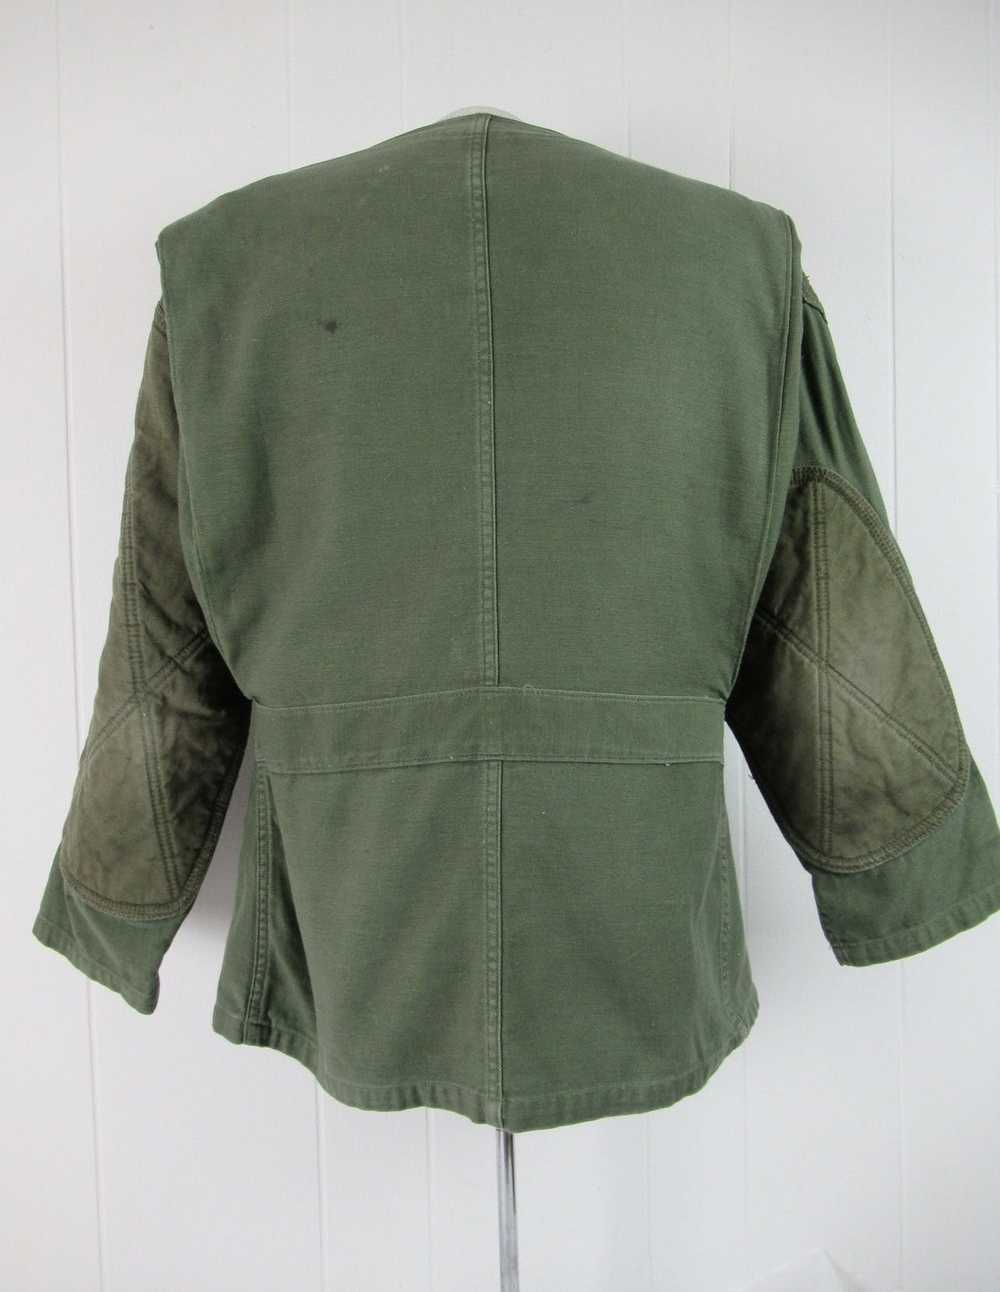 Military 1969 USMC shooting jacket - image 3